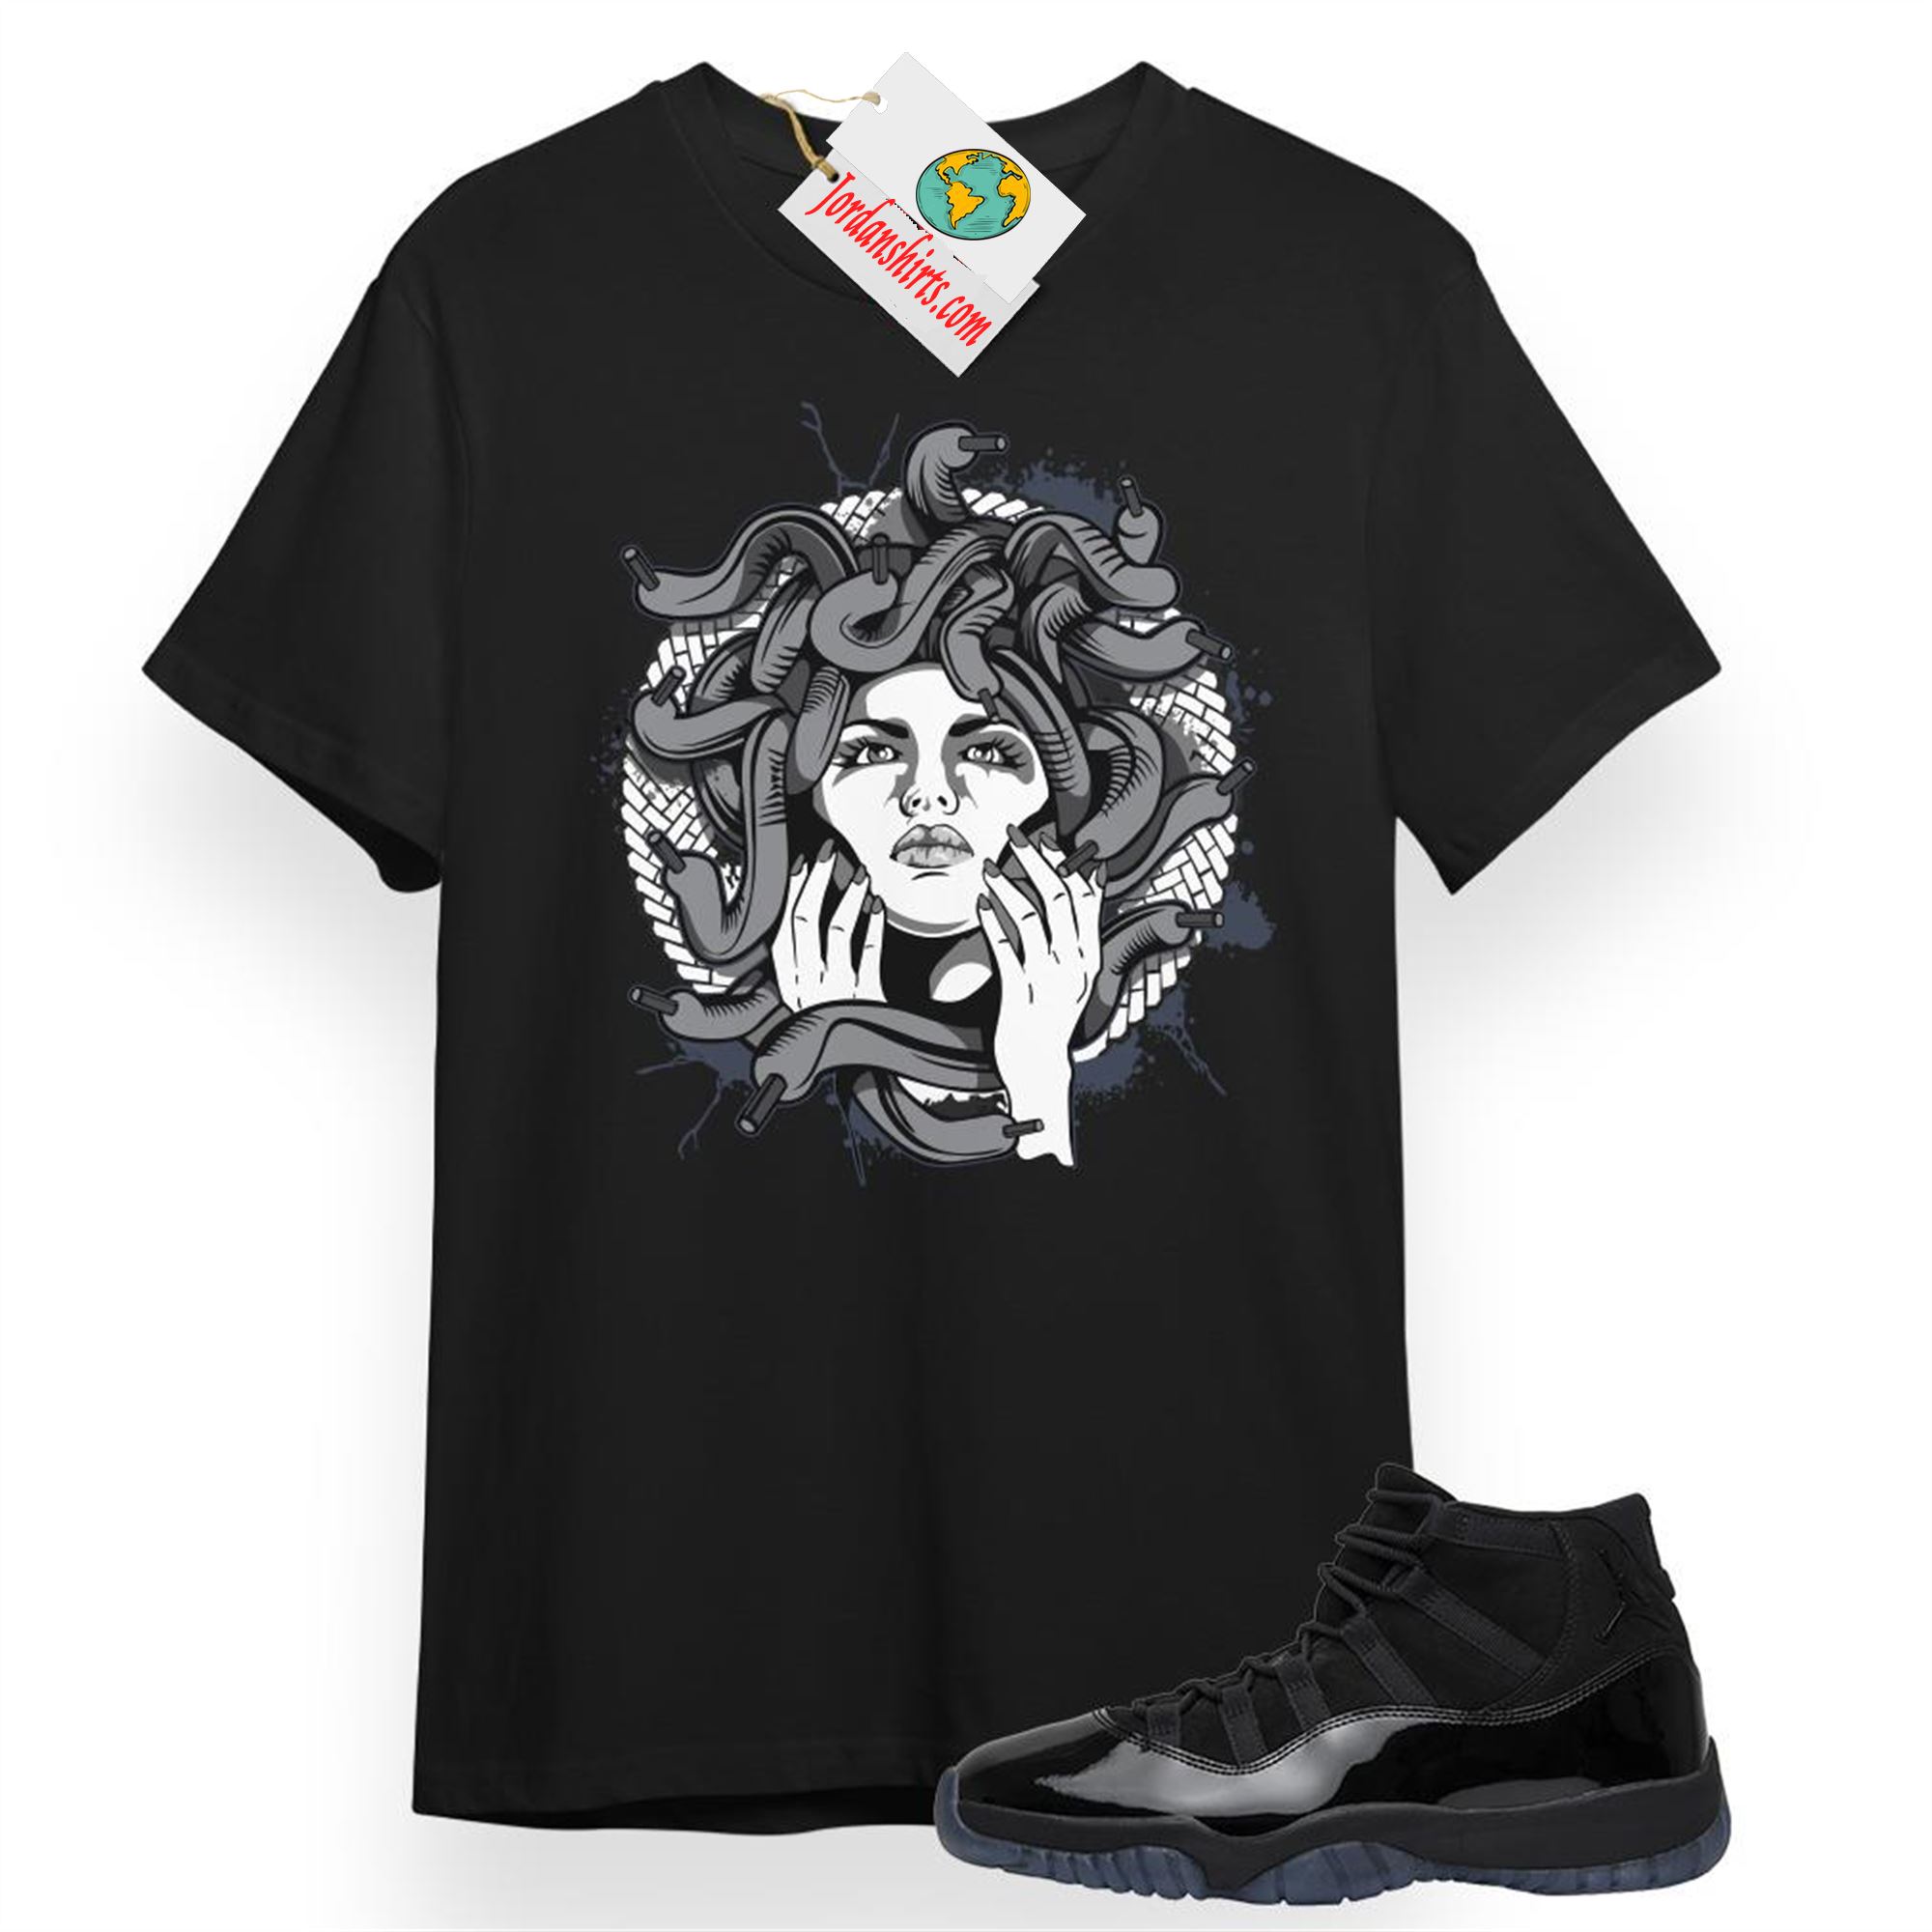 Jordan 11 Shirt, Medusa Black T-shirt Air Jordan 11 Cap And Gown 11s Full Size Up To 5xl